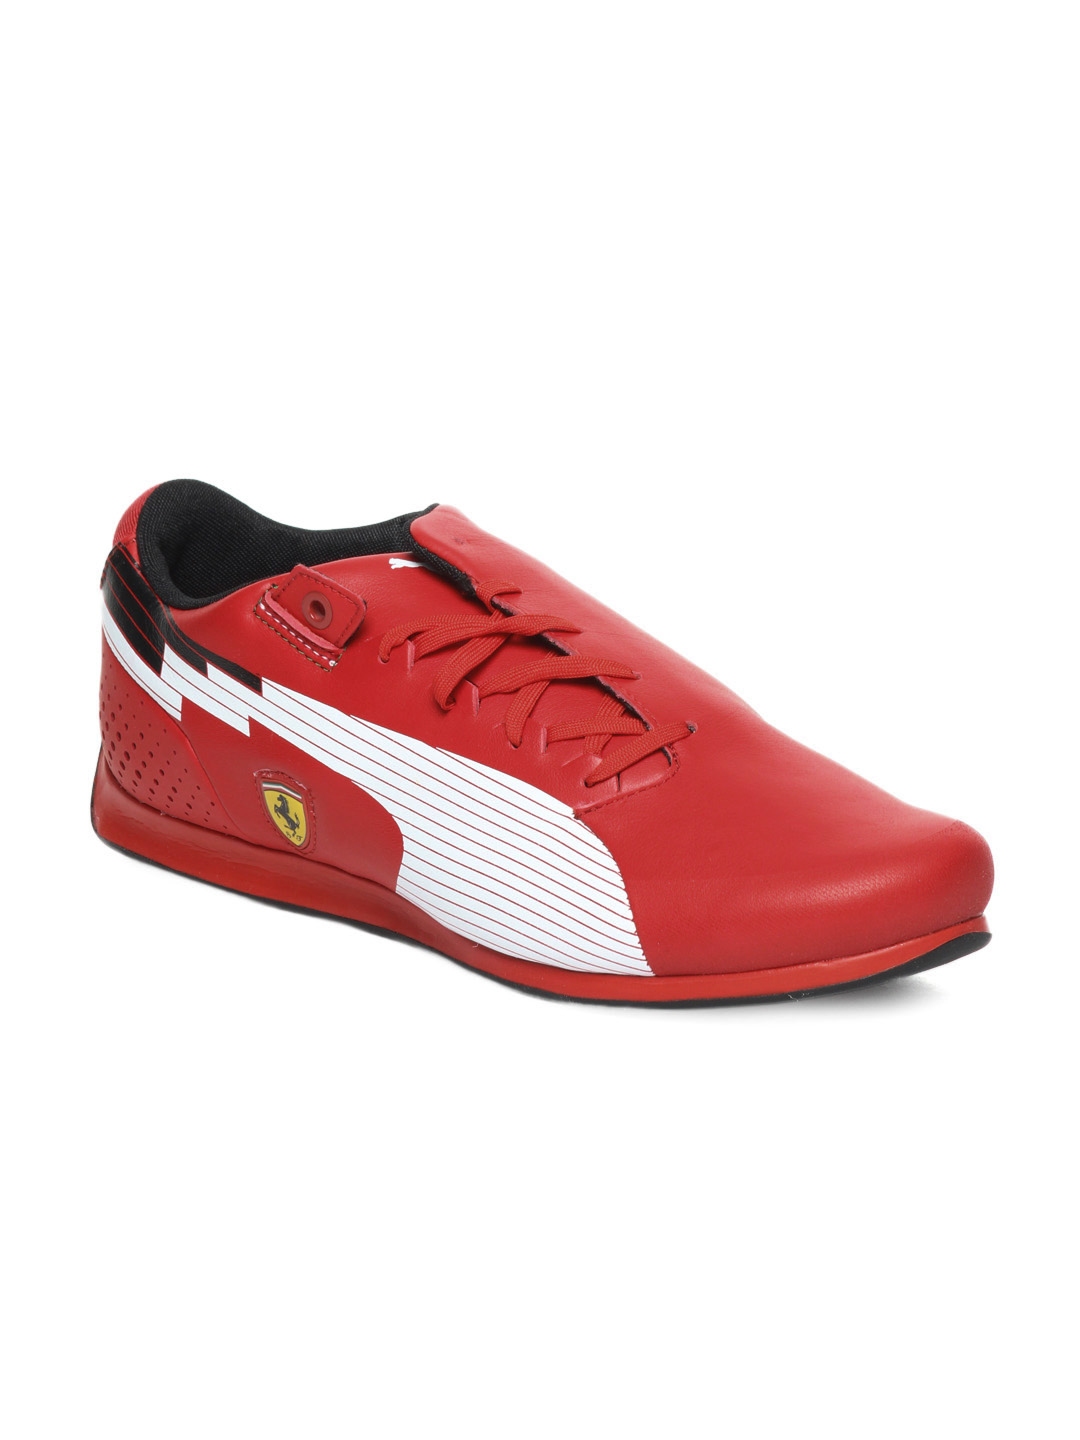 Buy PUMA Motorsport Men Red EvoSPEED Low SF Ferrari Shoes - Casual ...